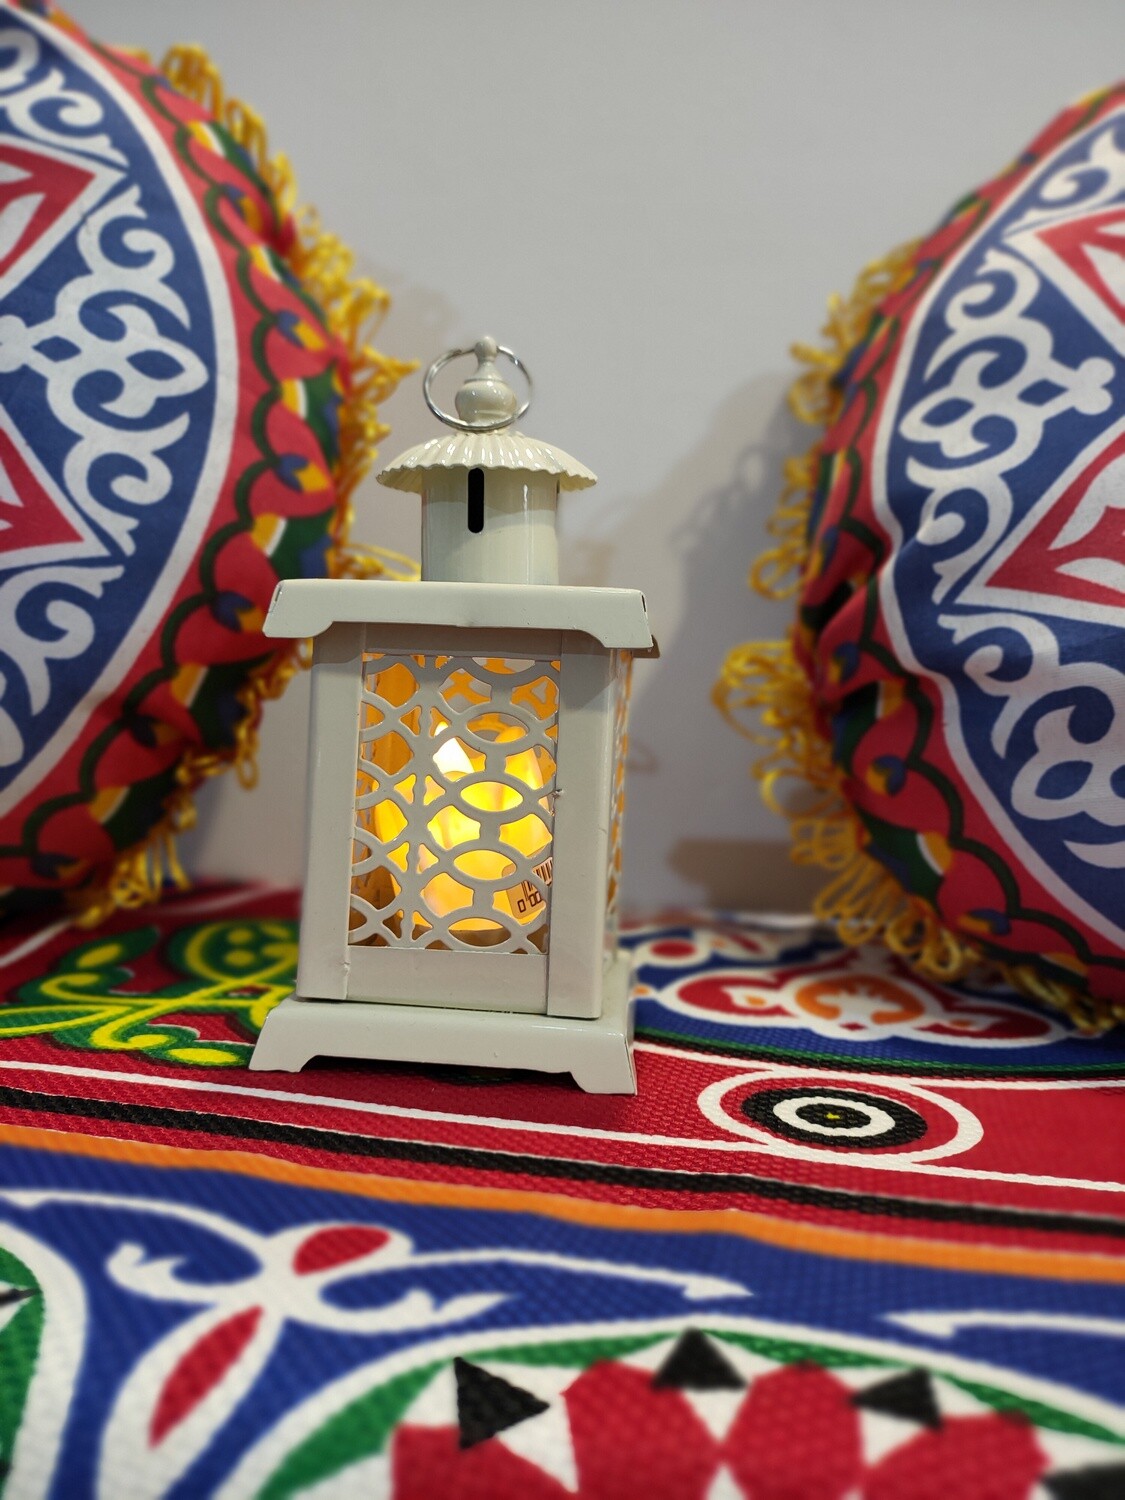 Ramadan metallic lantern